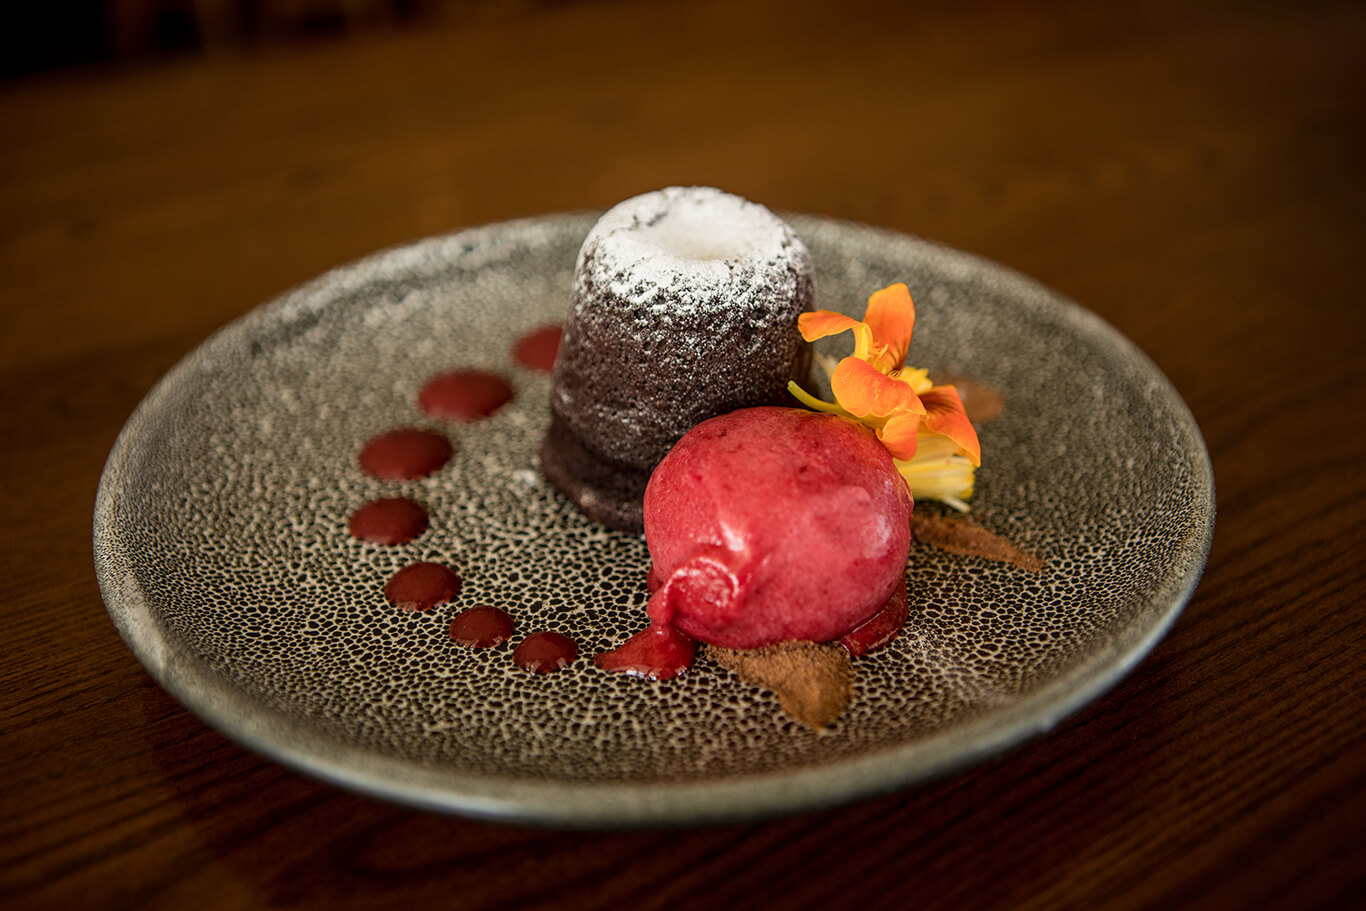 A plate of chocolate dessert served alongside a berry sorbet.